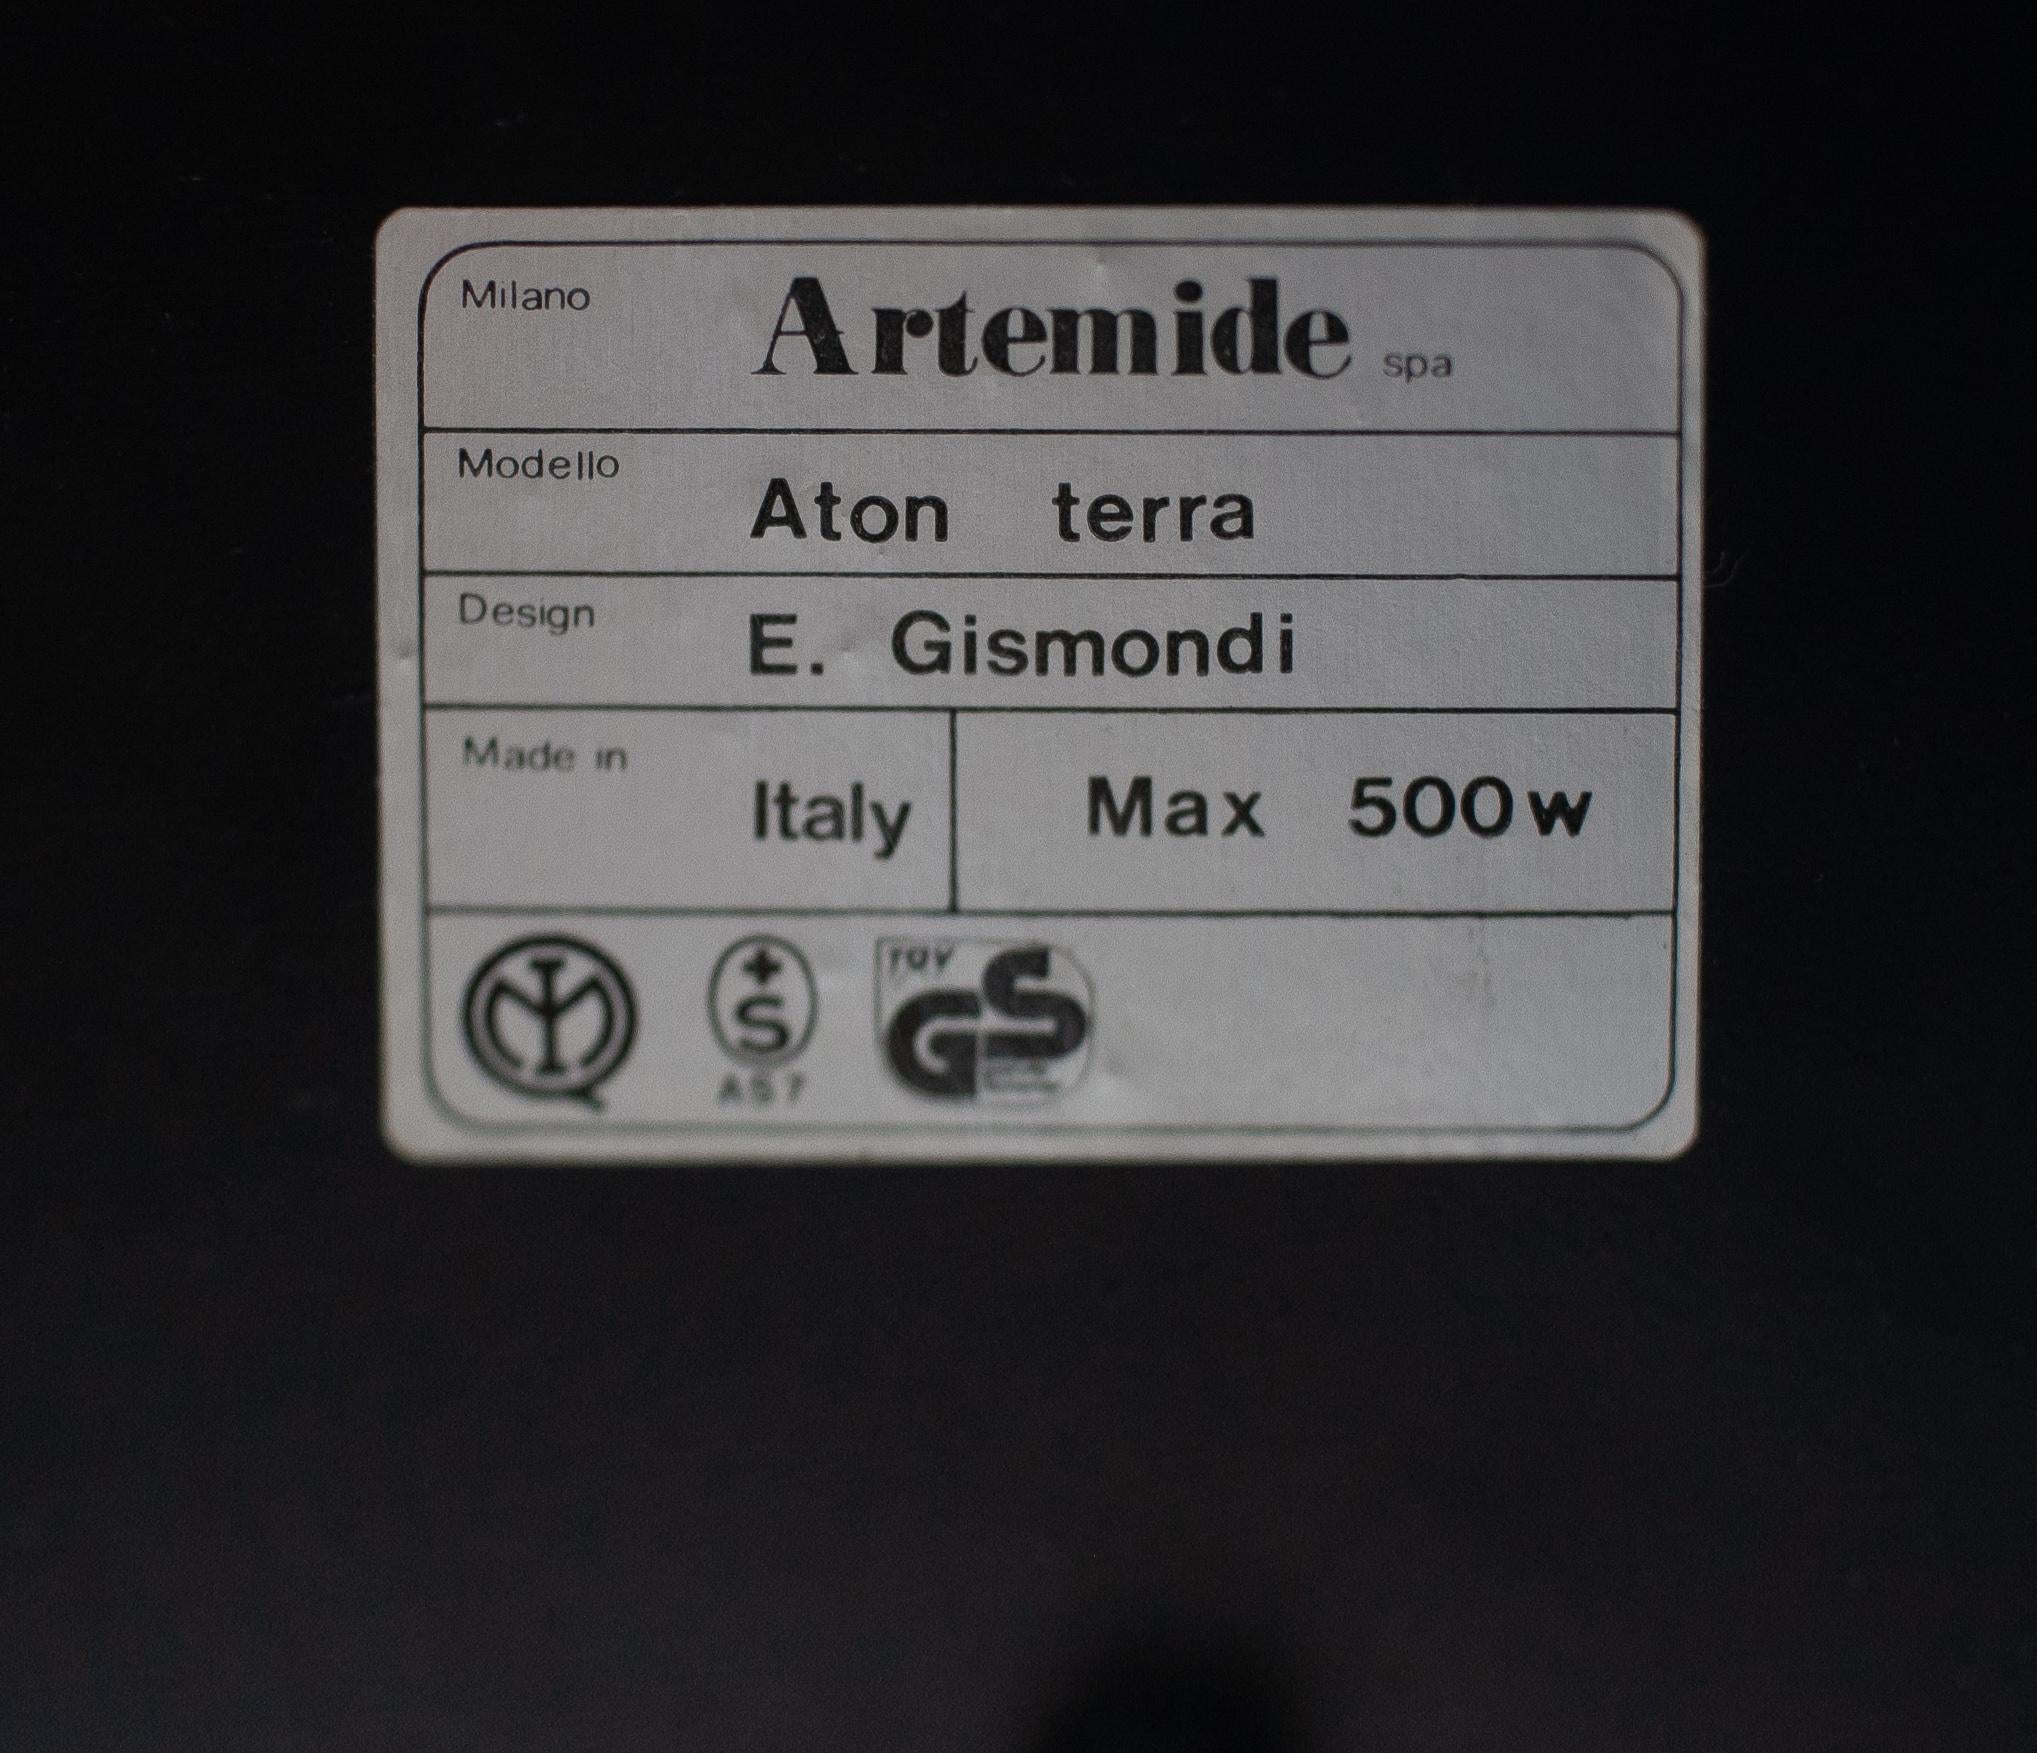 aton artemide